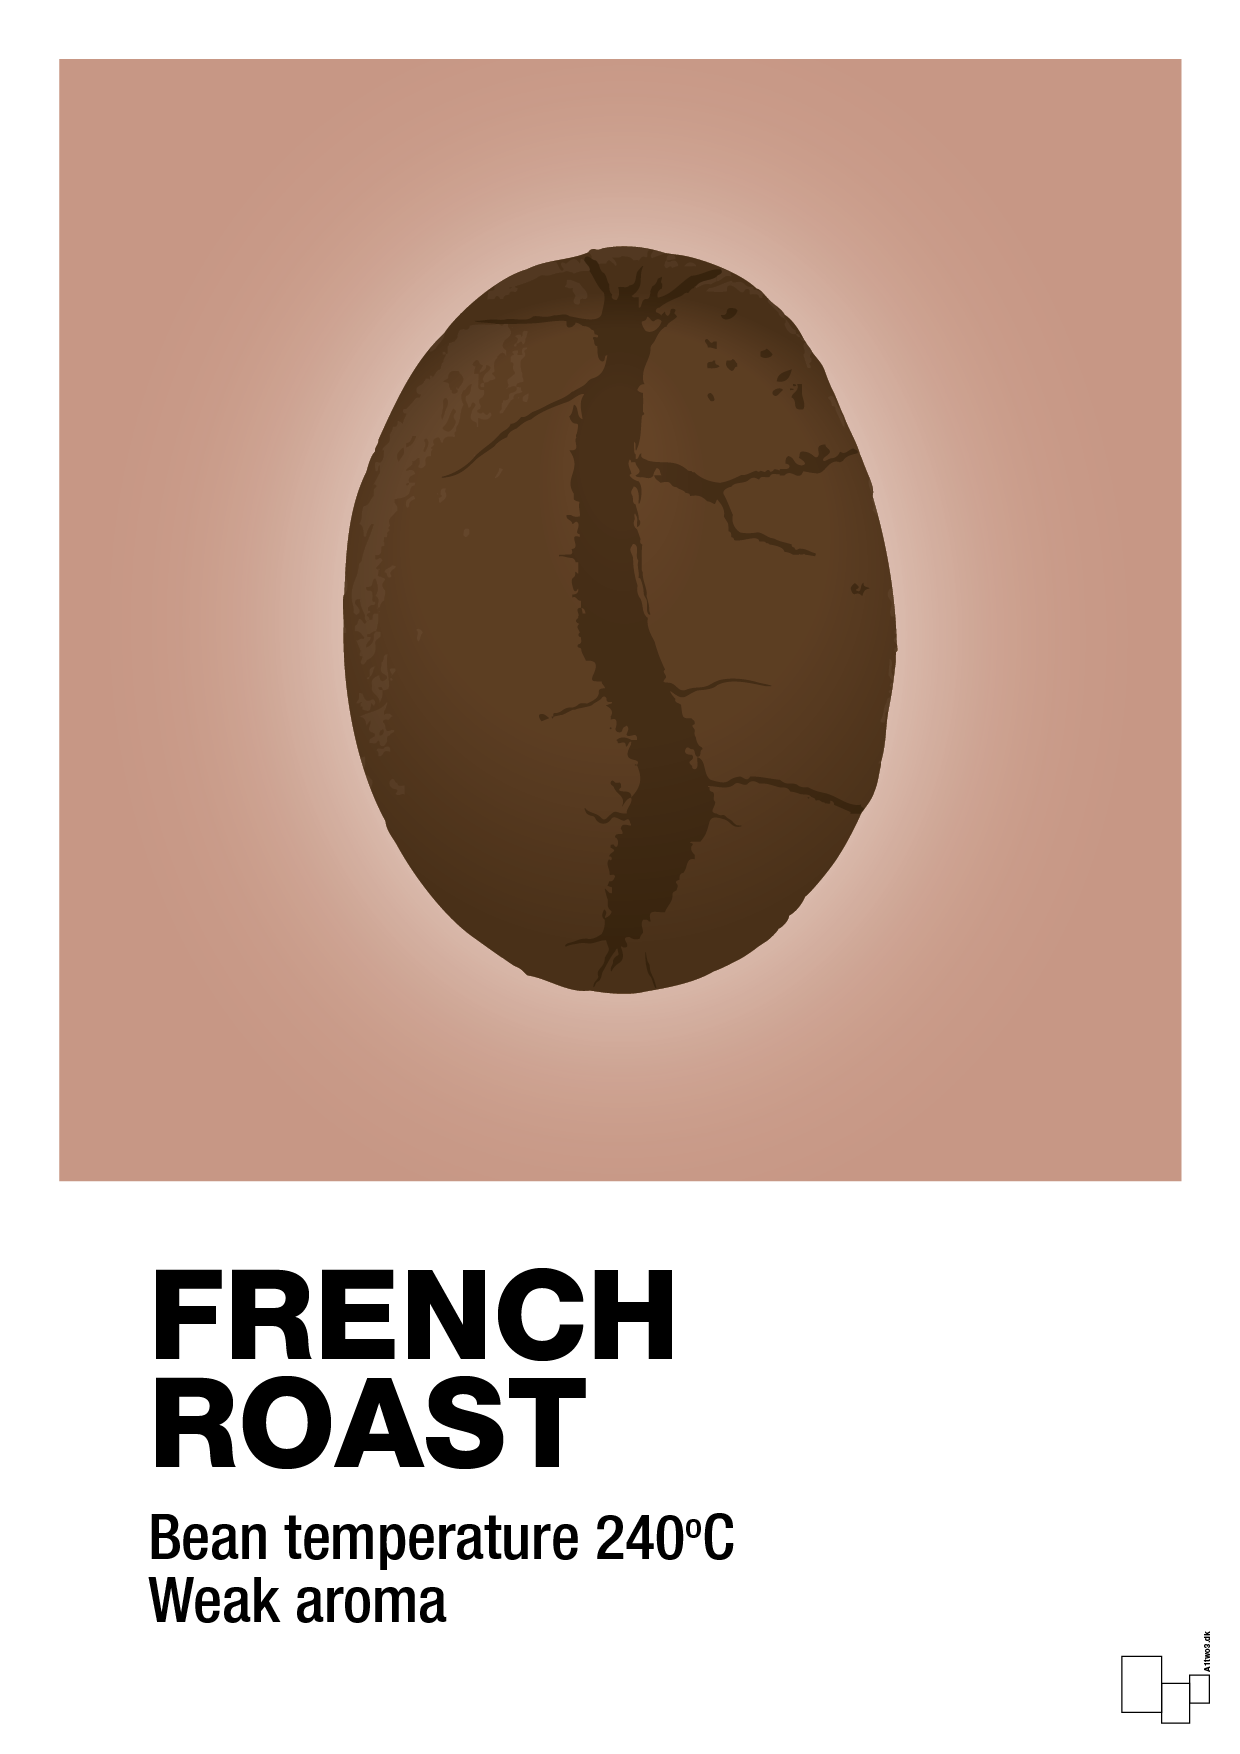 french roast - Plakat med Mad & Drikke i Powder